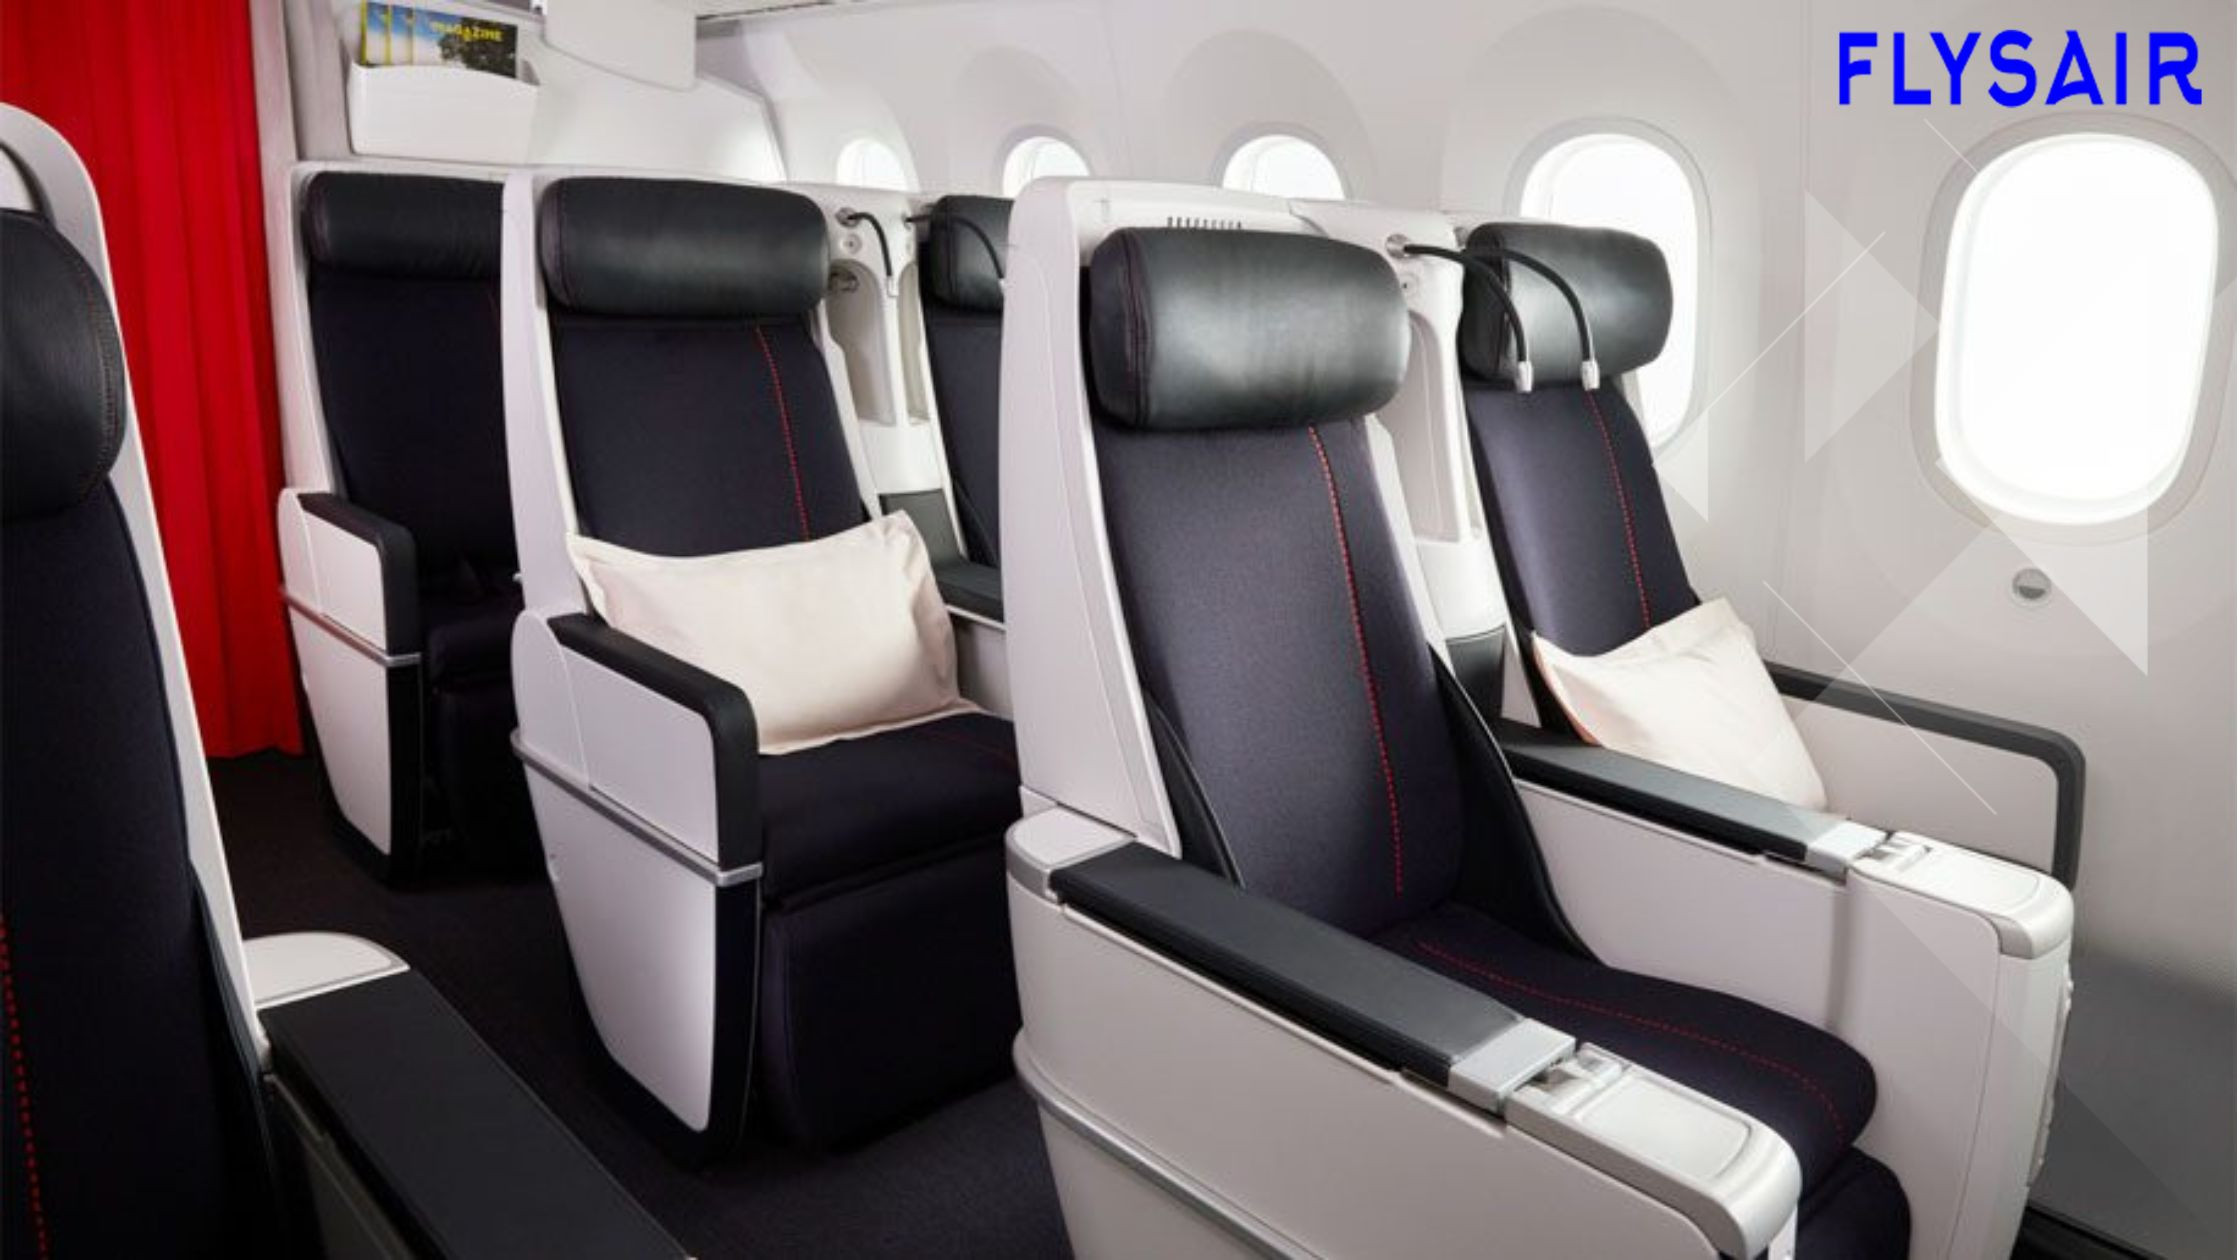 The Unique Features of Air France’s Premium Economy Class